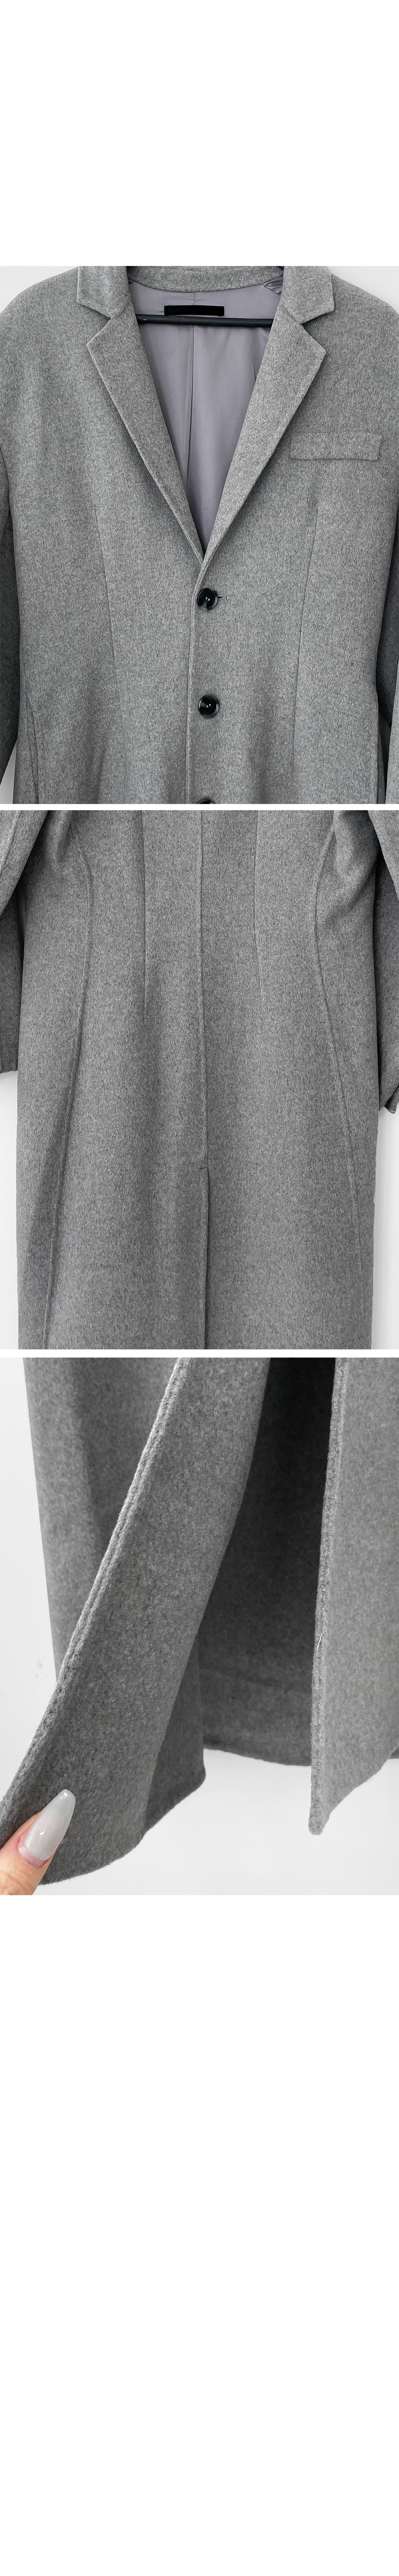 dress grey color image-S1L10